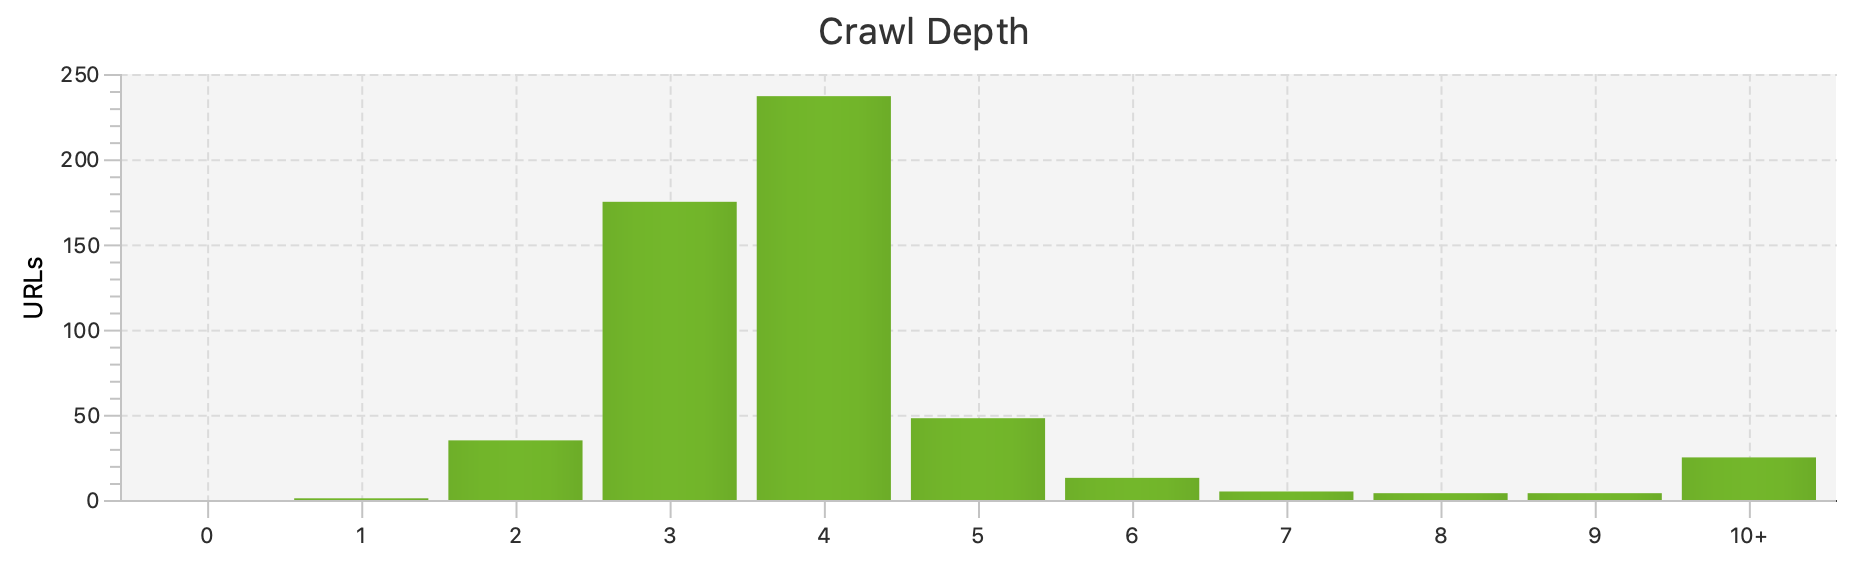 Crawl Depth